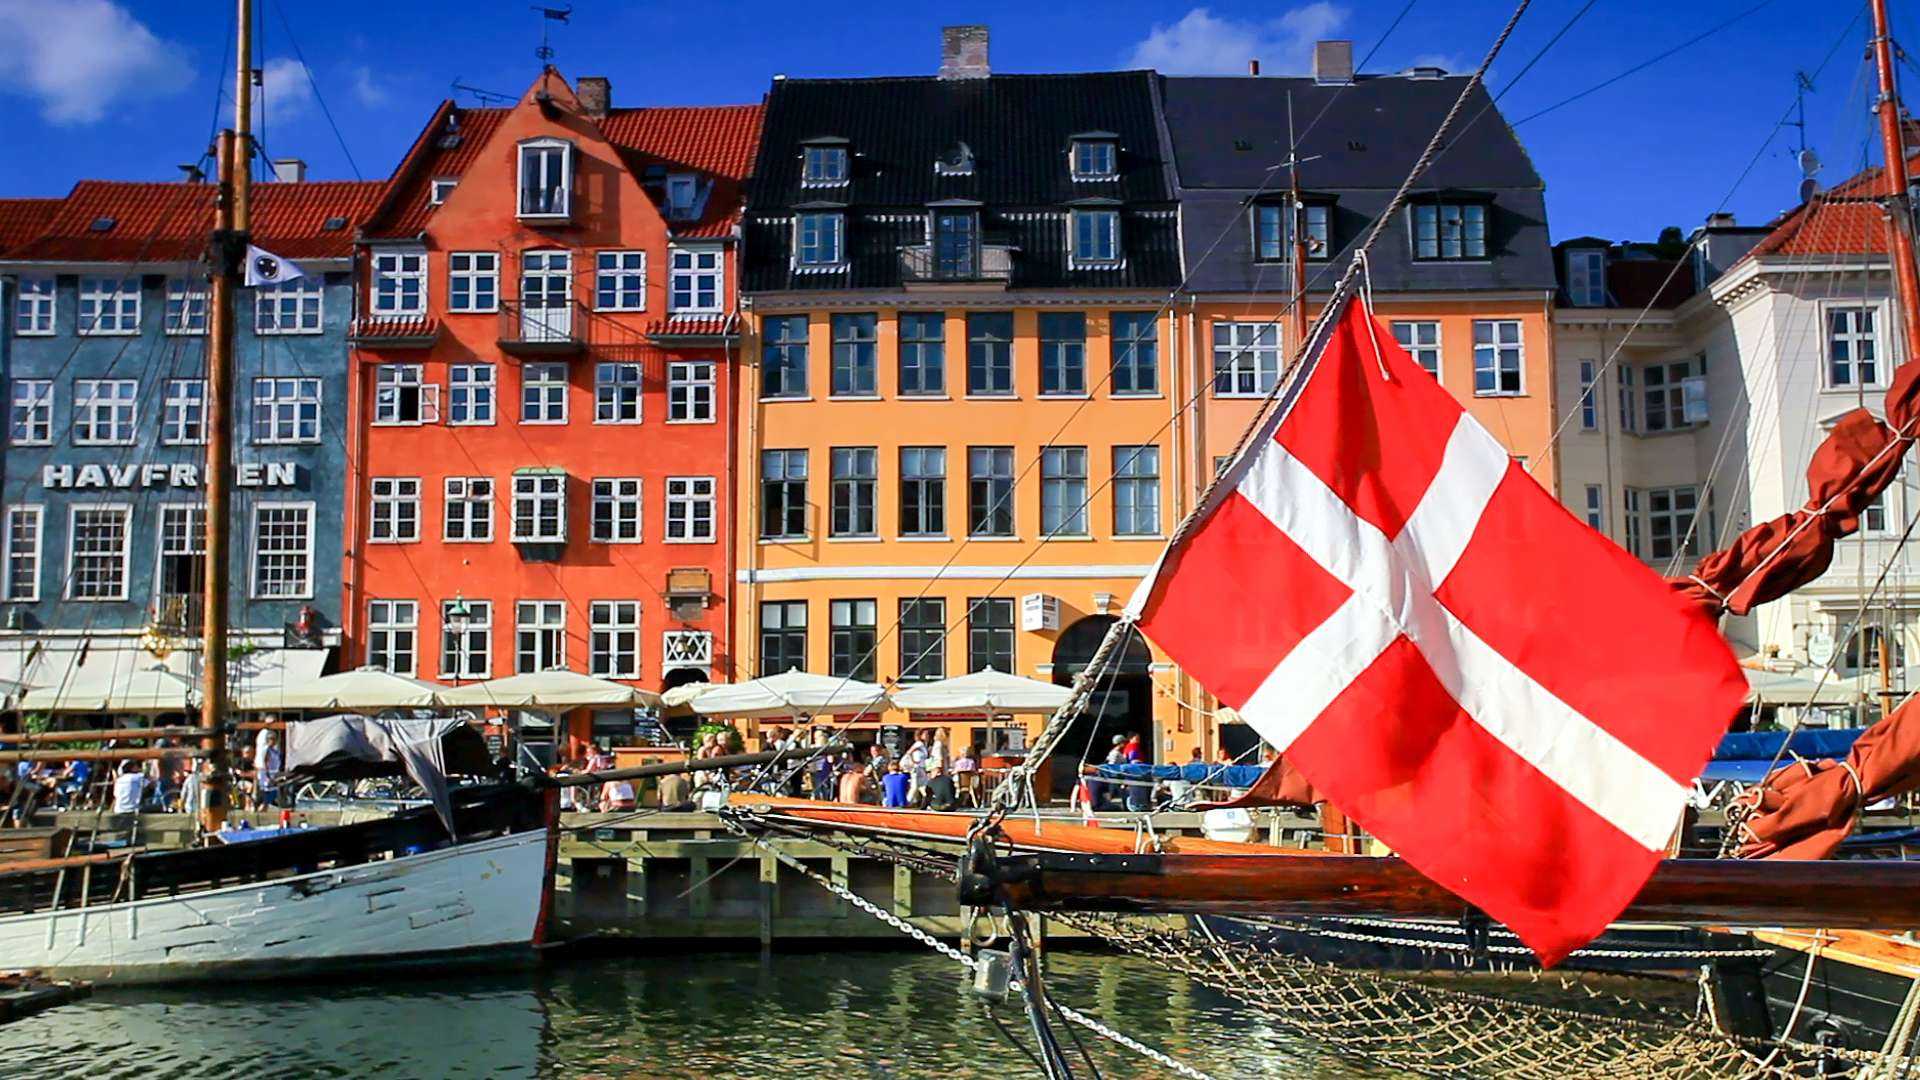 Danmark. Денмарк Дания. Королевство Дания Копенгаген. Дания с флагами Копенгаген. Дания Копенгаген достопримечательности флаг.